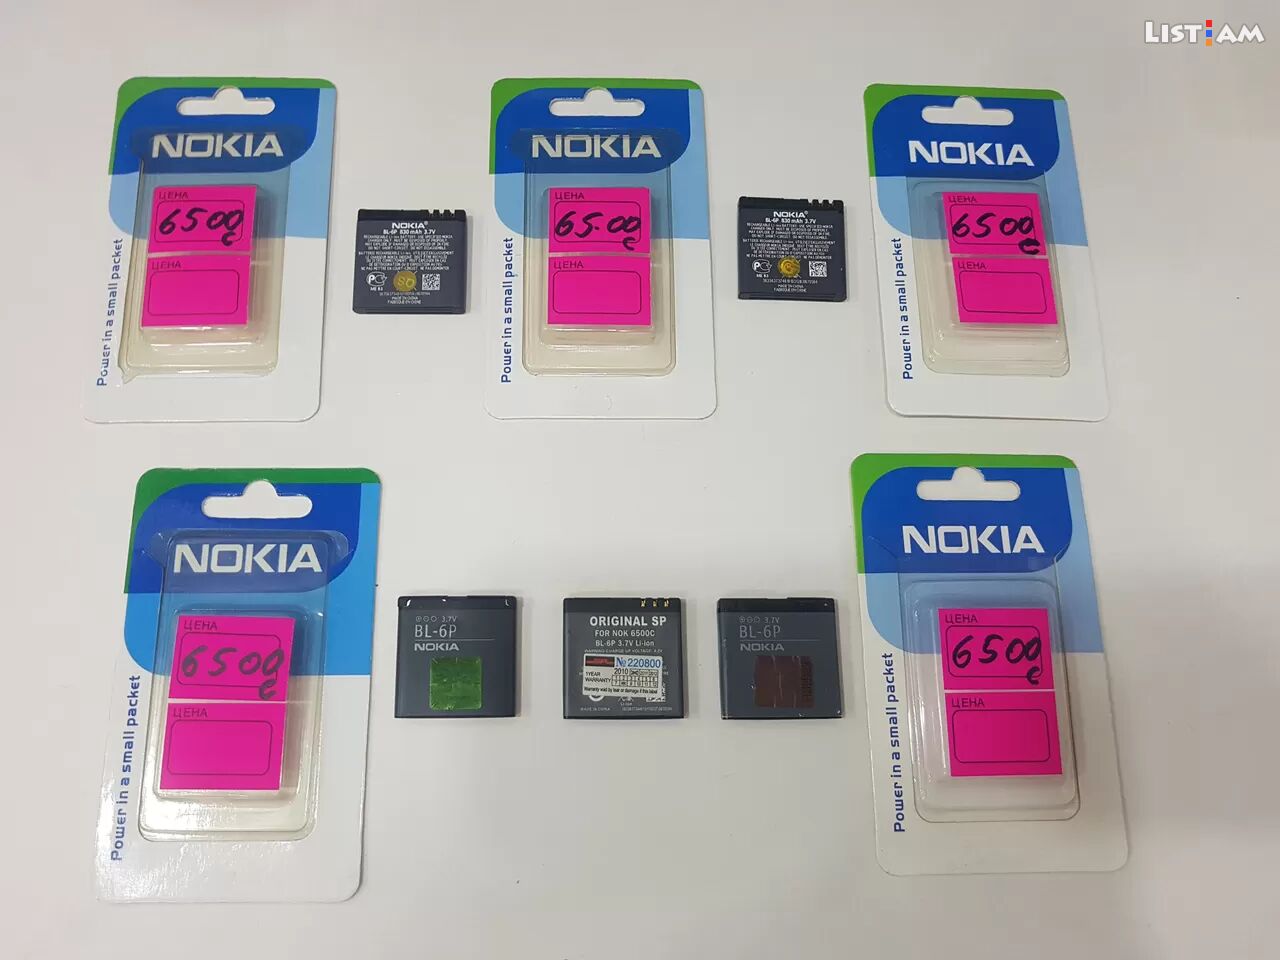 Nokia 6500c battery